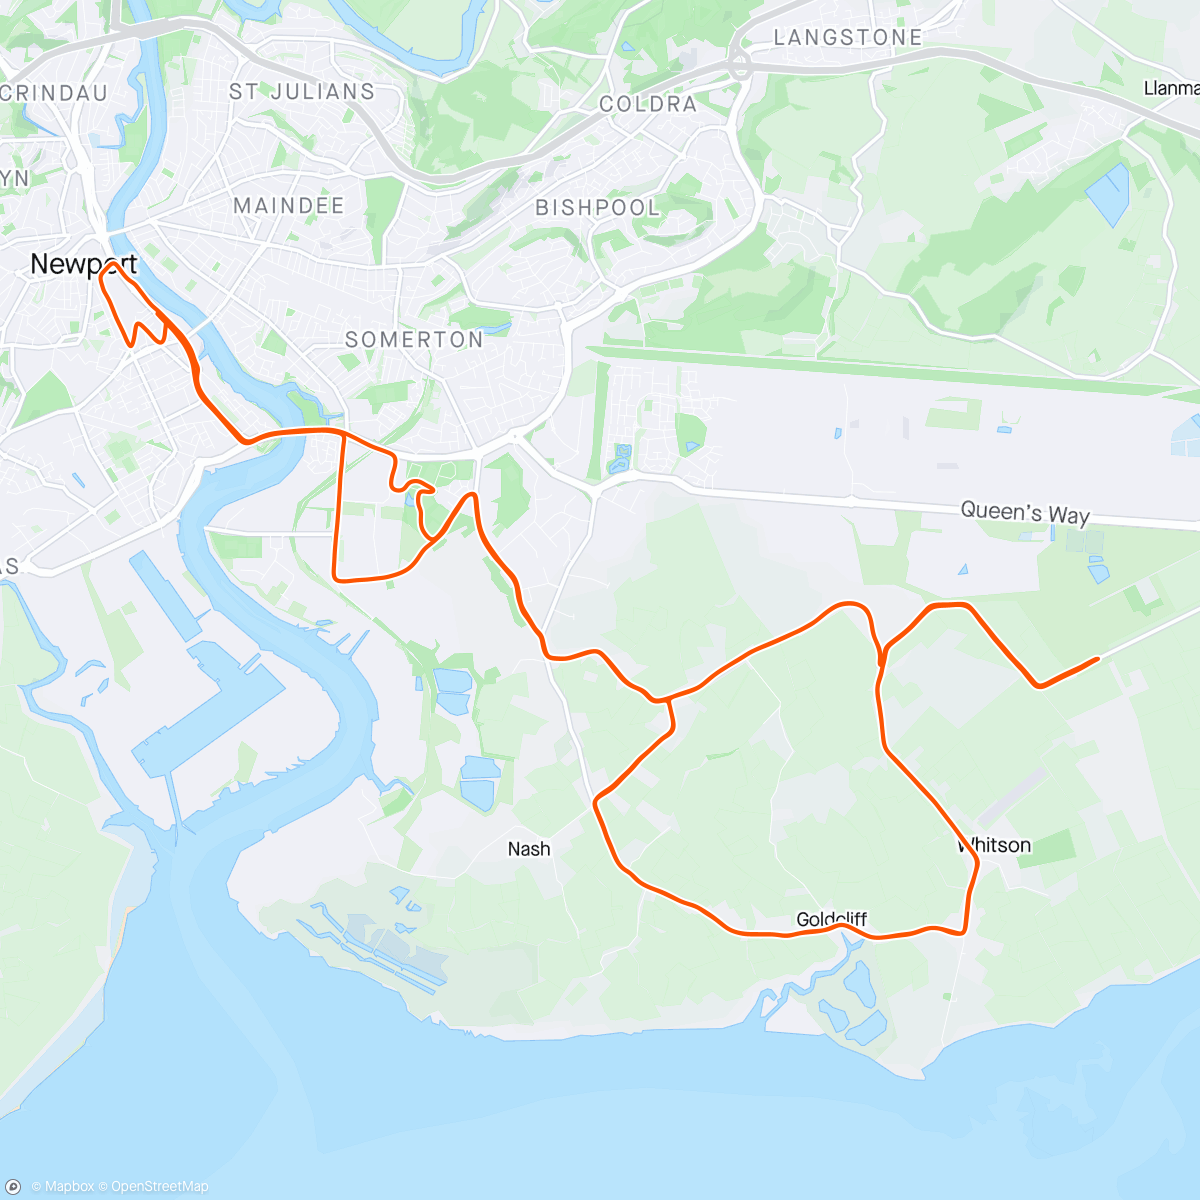 「Newport (Wales) Marathon - 2:50:48」活動的地圖